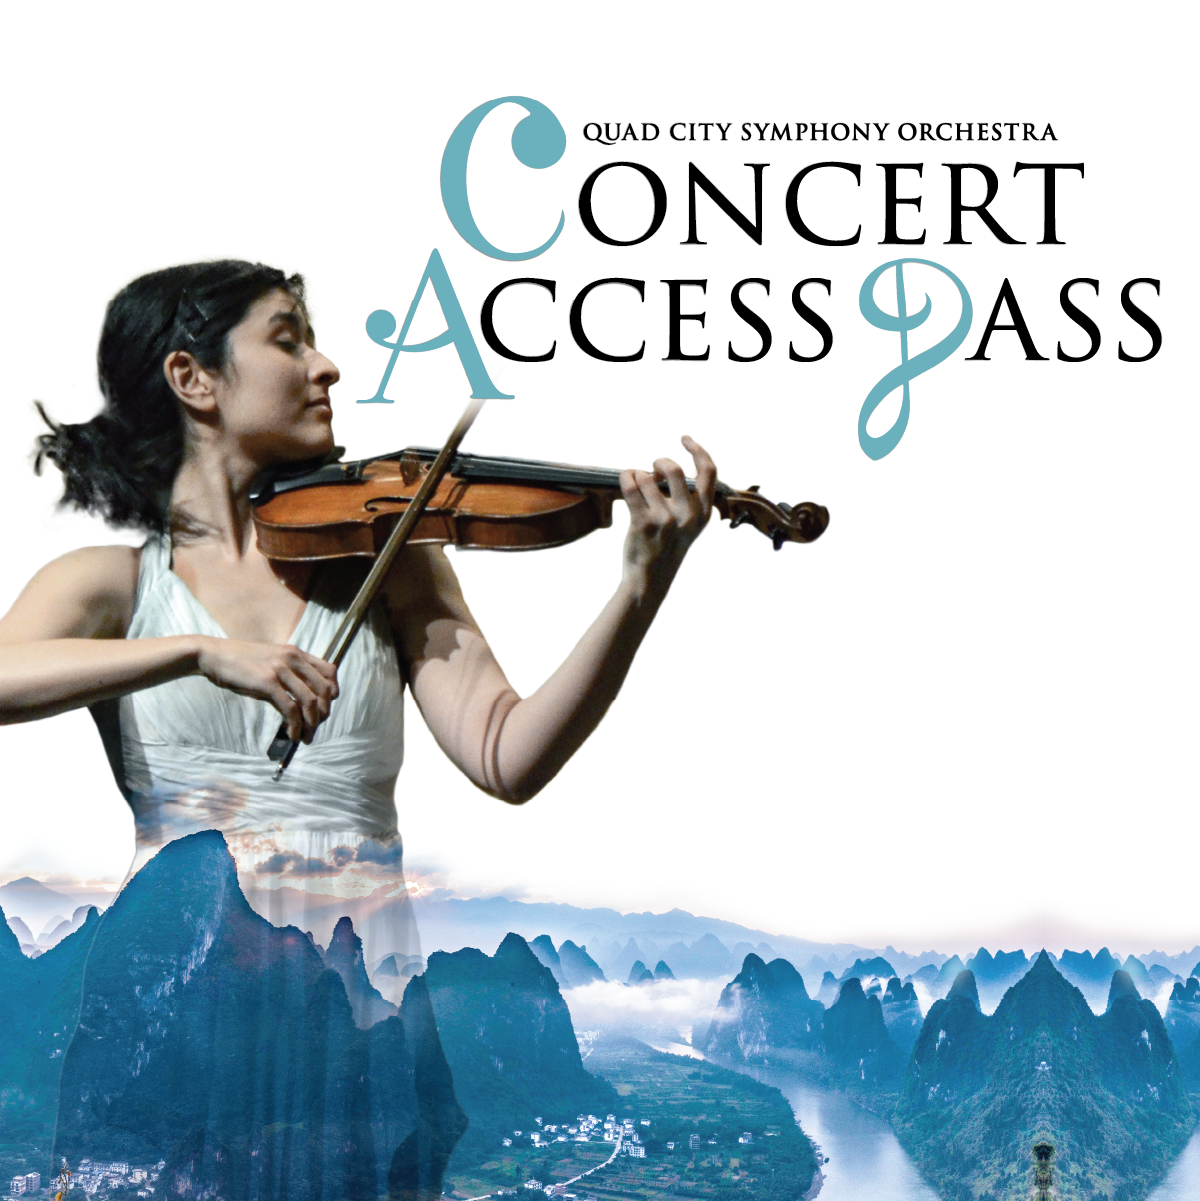 QCSO Introduces Concert Access Pass